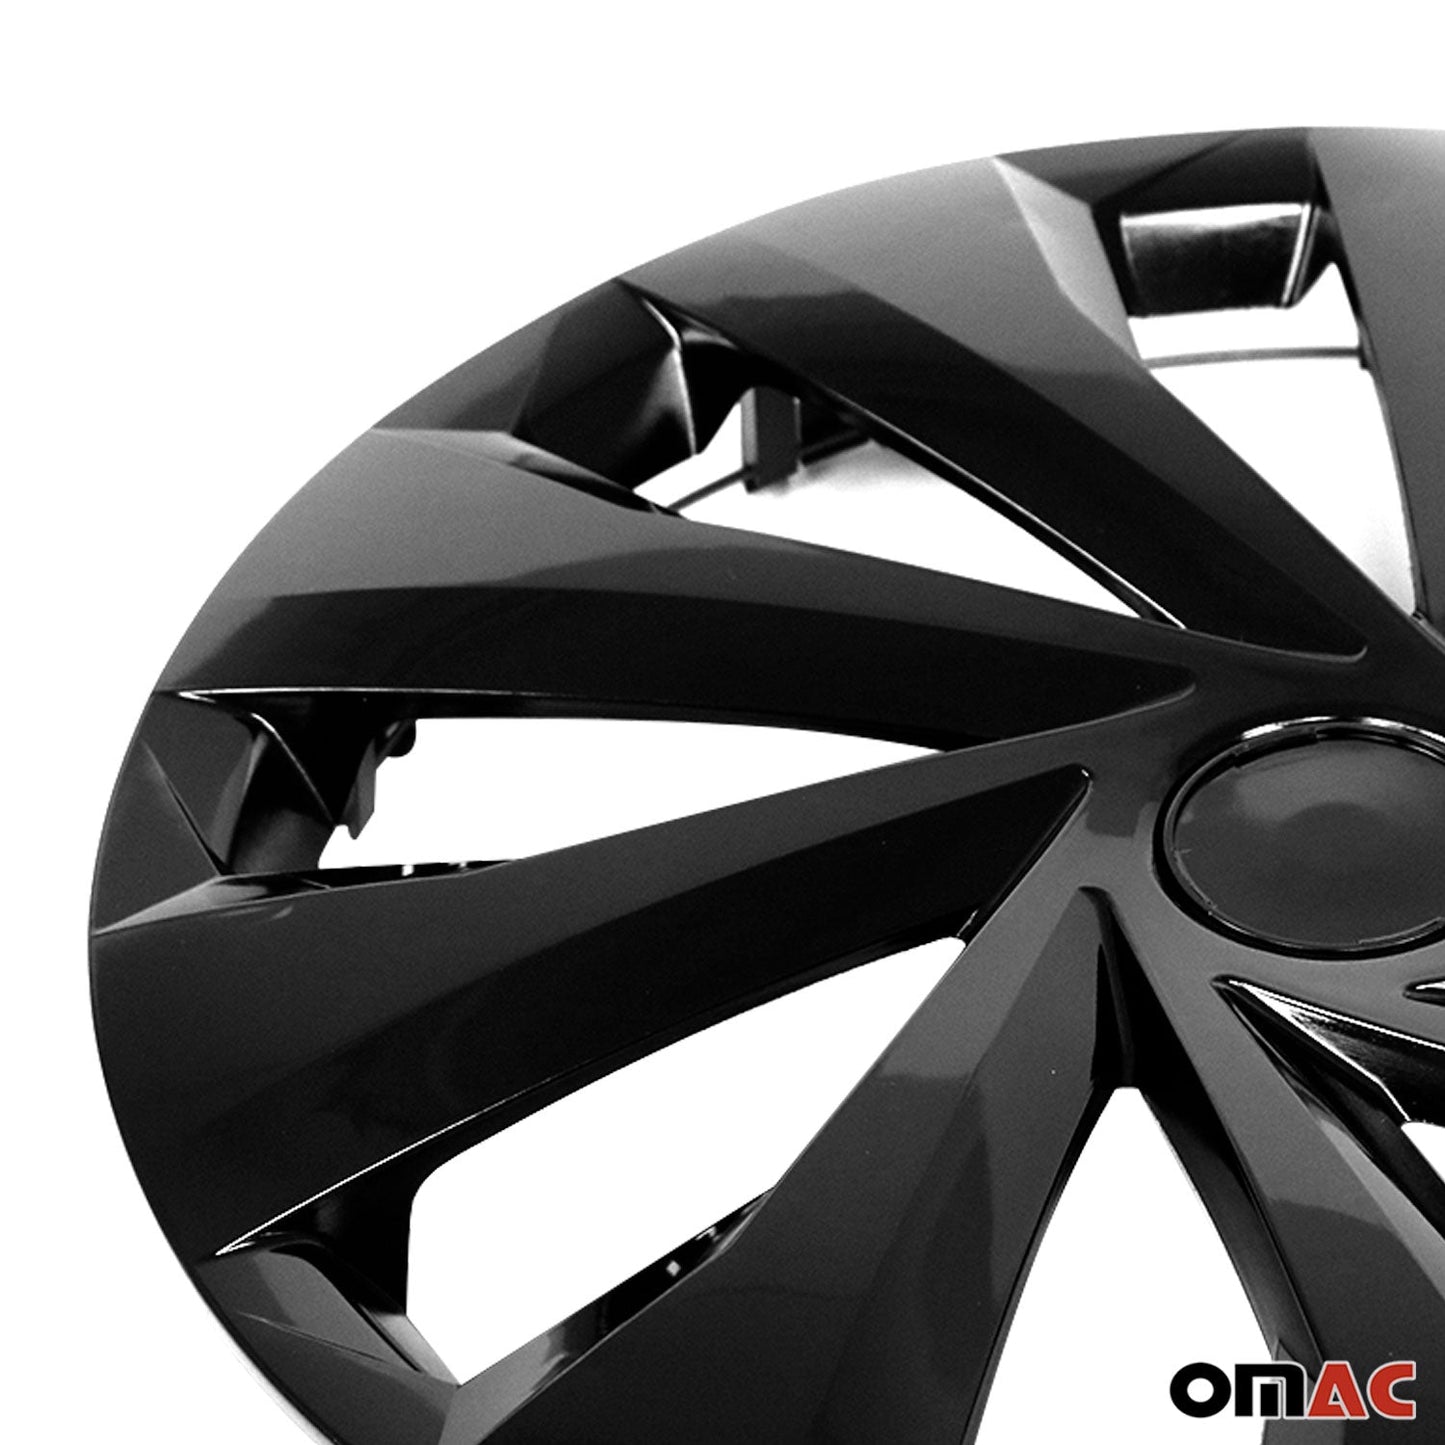 OMAC 15 Inch Wheel Rim Covers Hubcaps for Lexus Black Gloss G002462